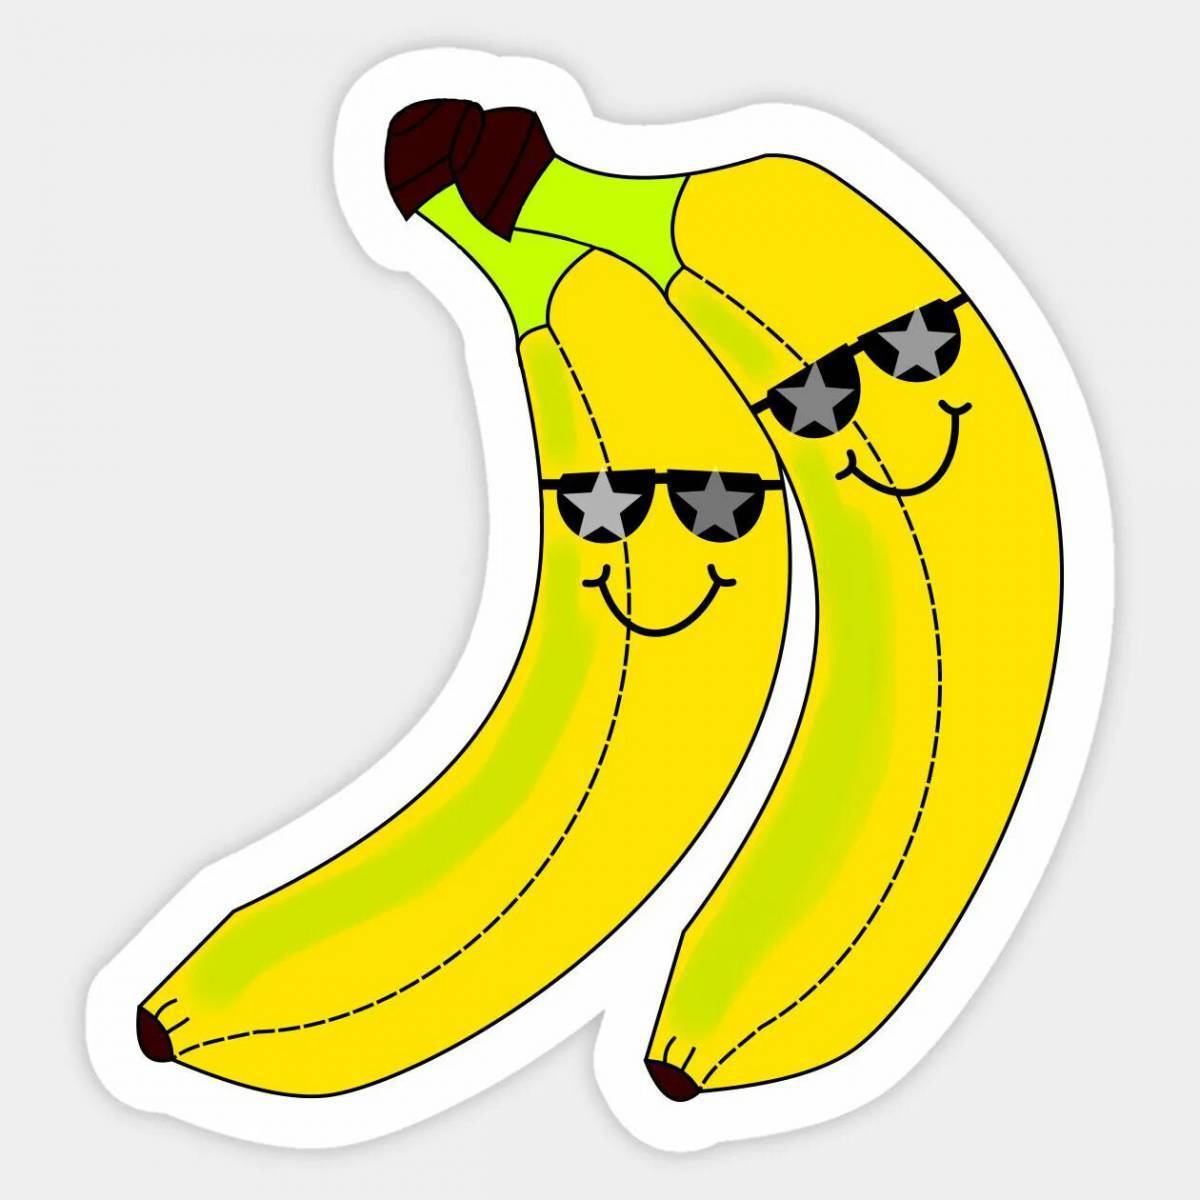 банан распечатать картинку